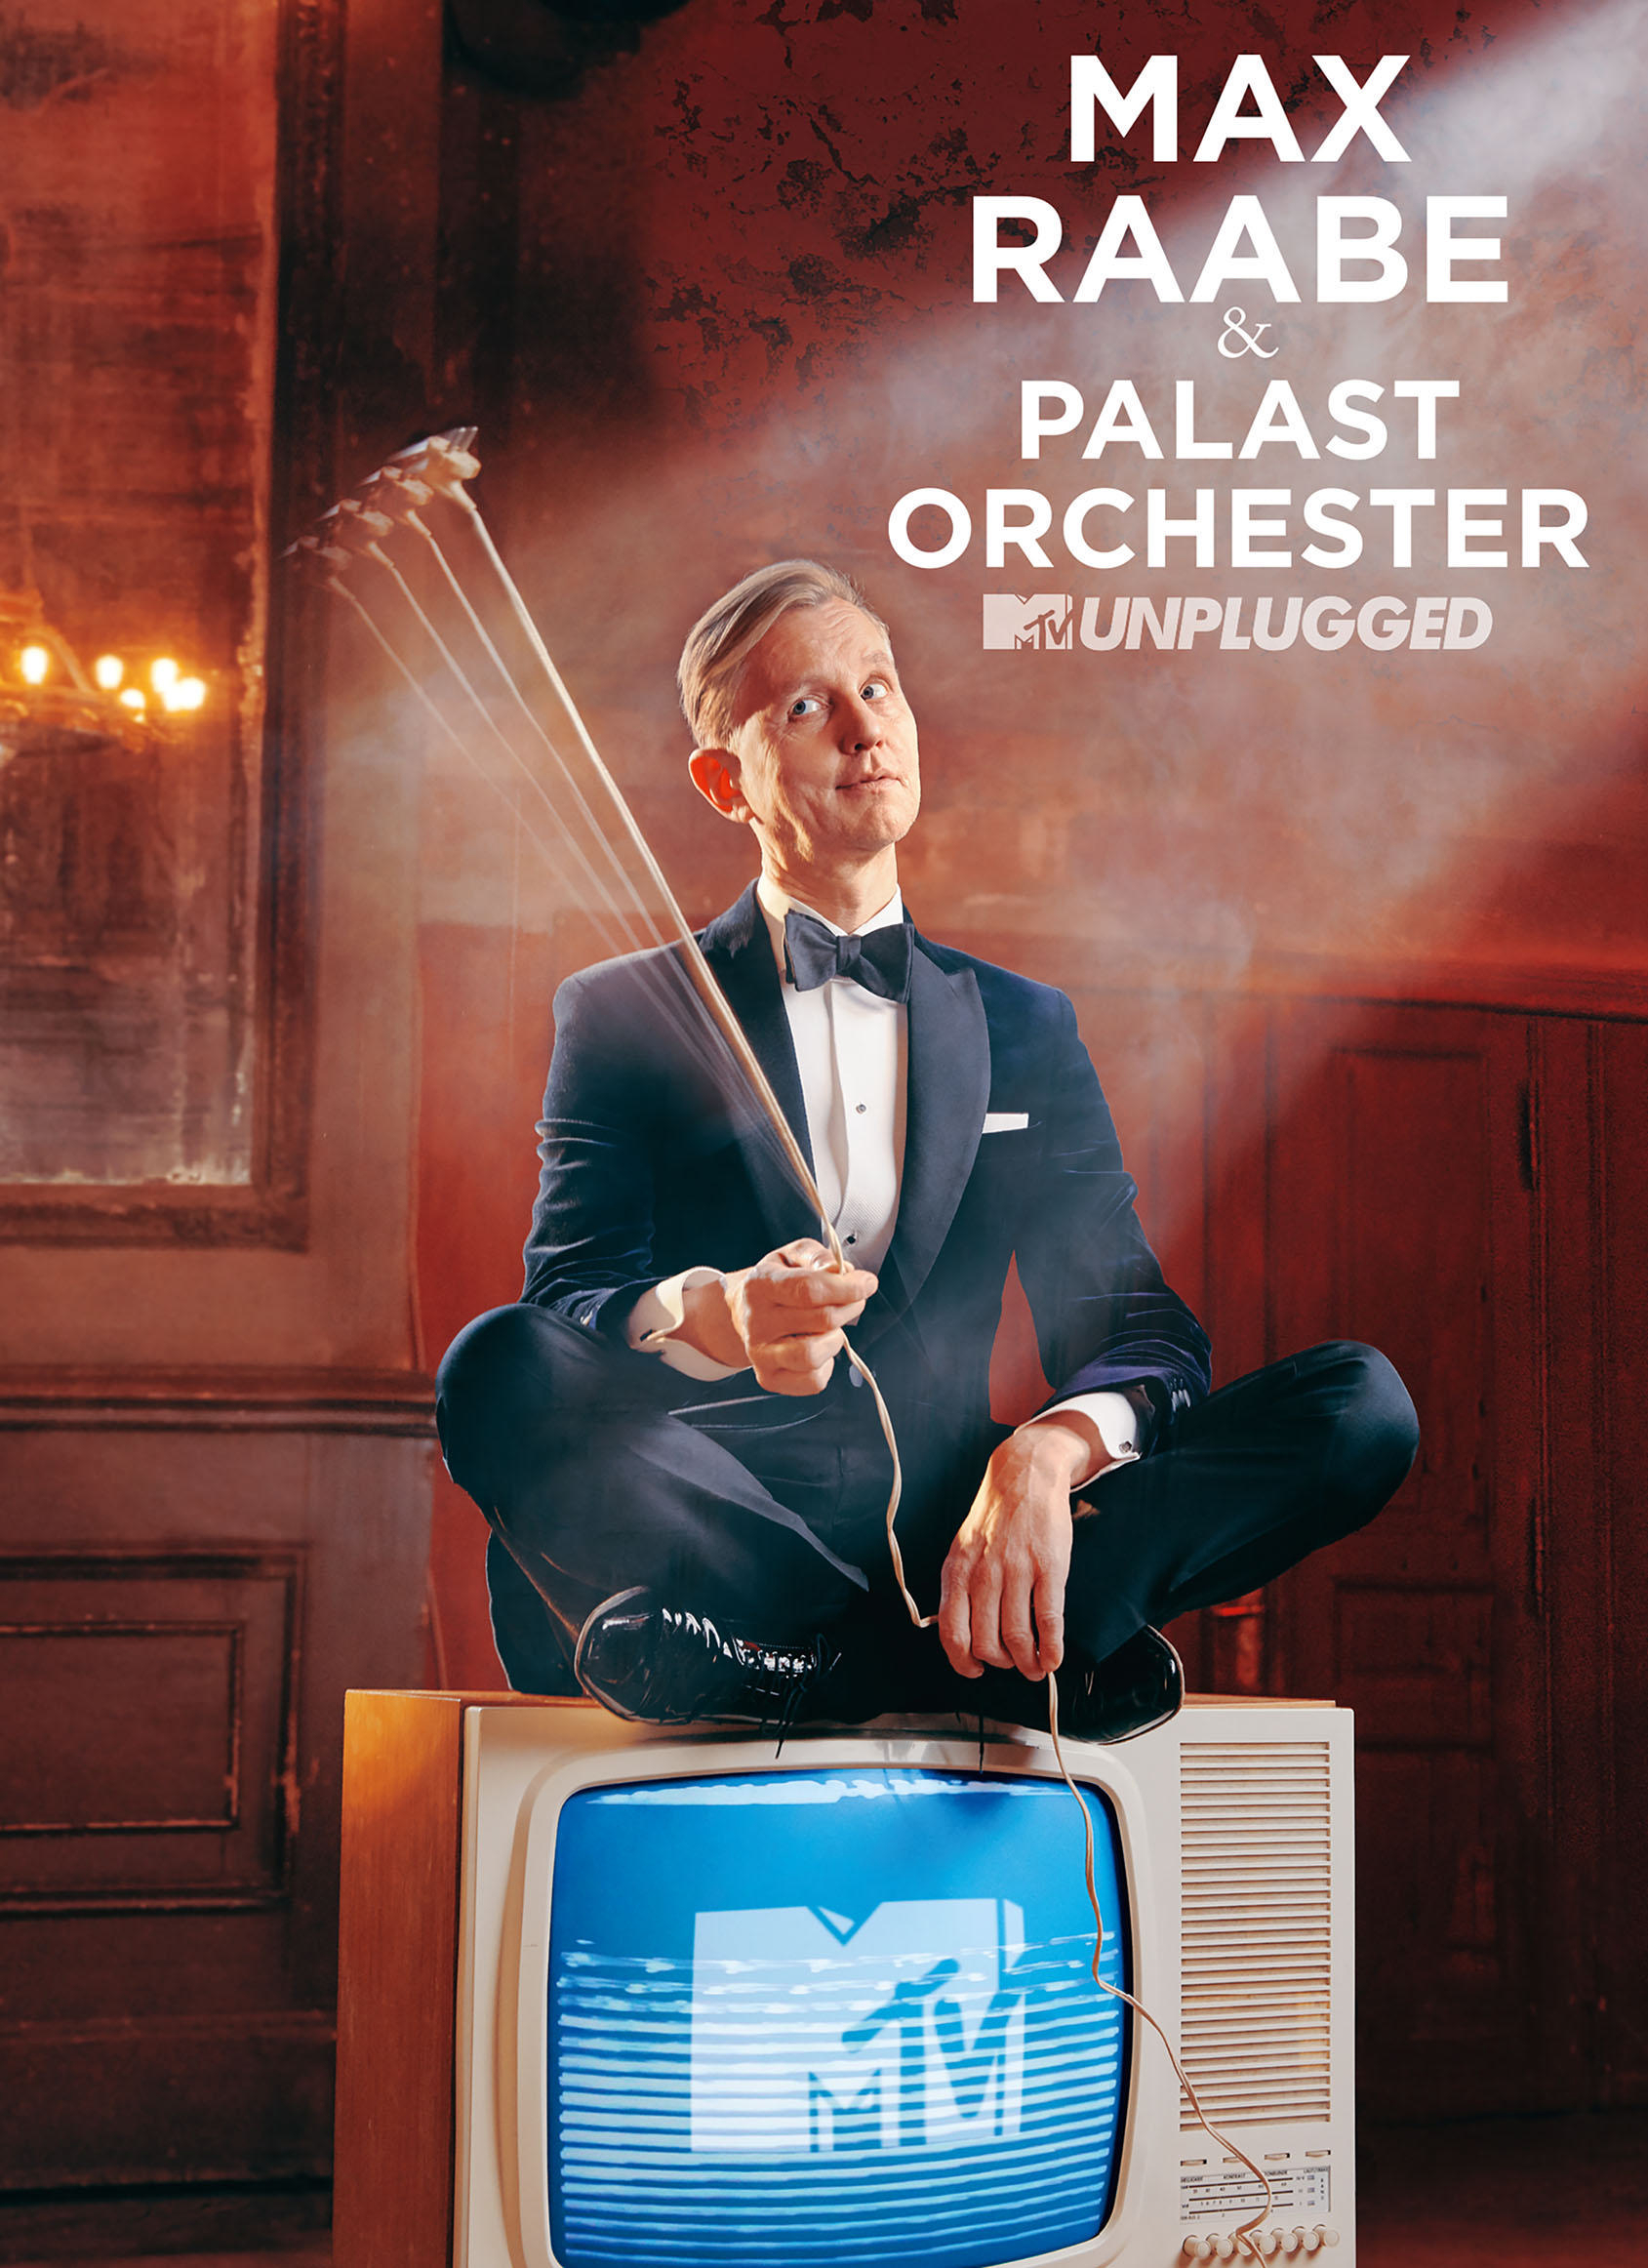 Palast Orchester & - Raabe MTV Max Unplugged - (DVD) Max Raabe